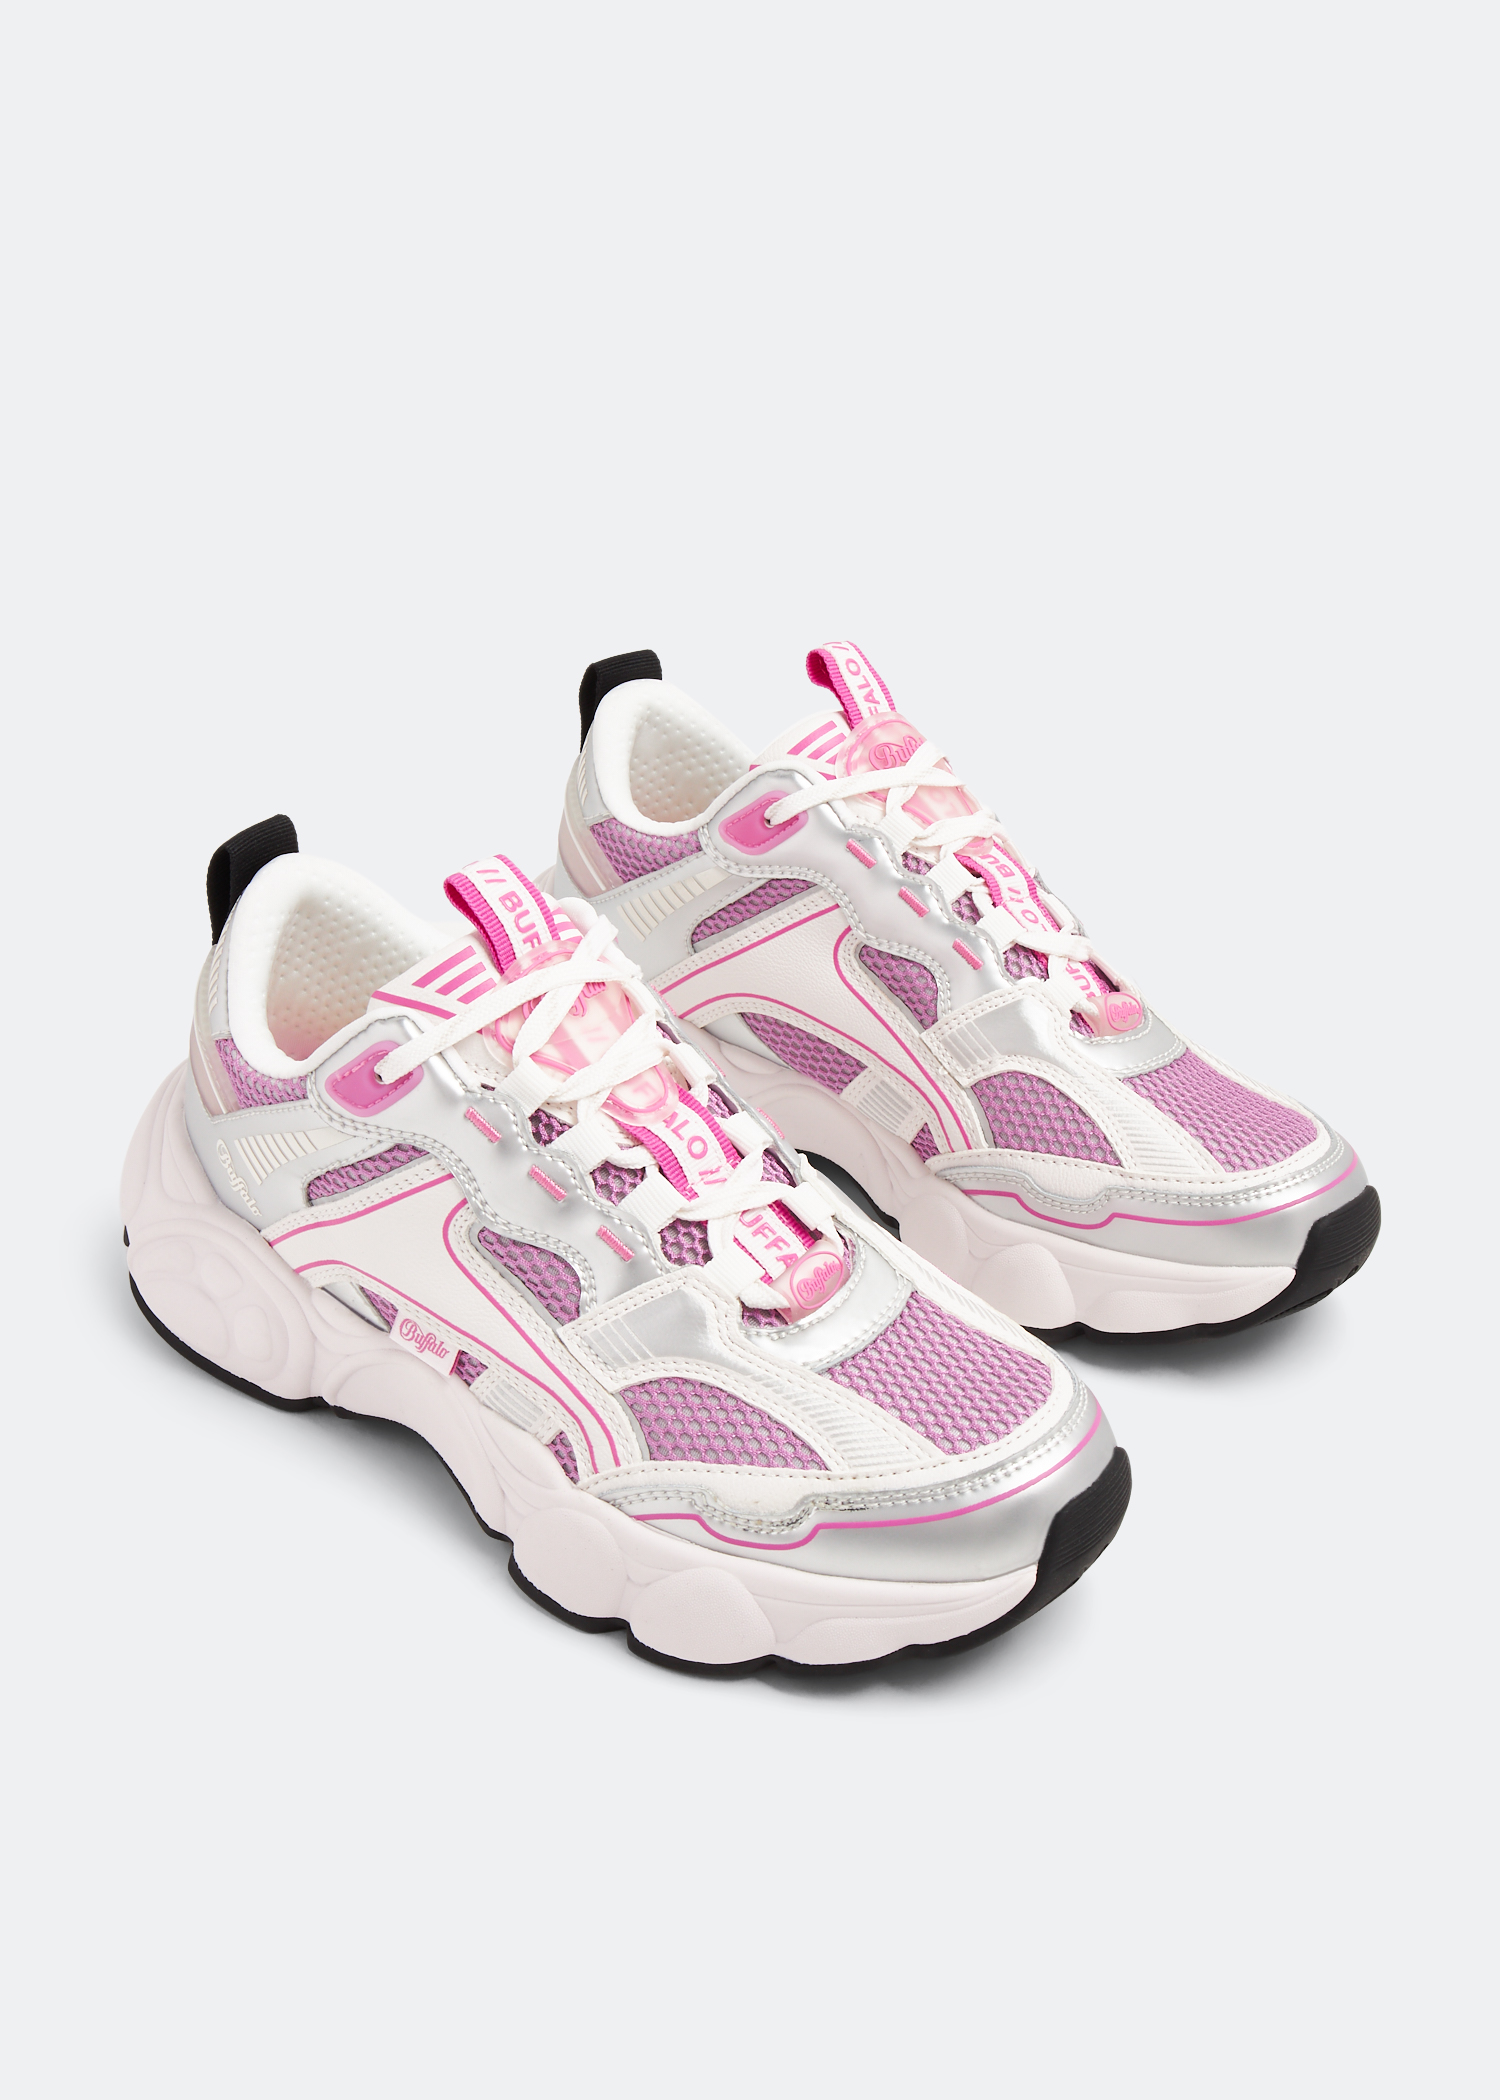 Buffalo chunky sneakers in pink glitter | ASOS